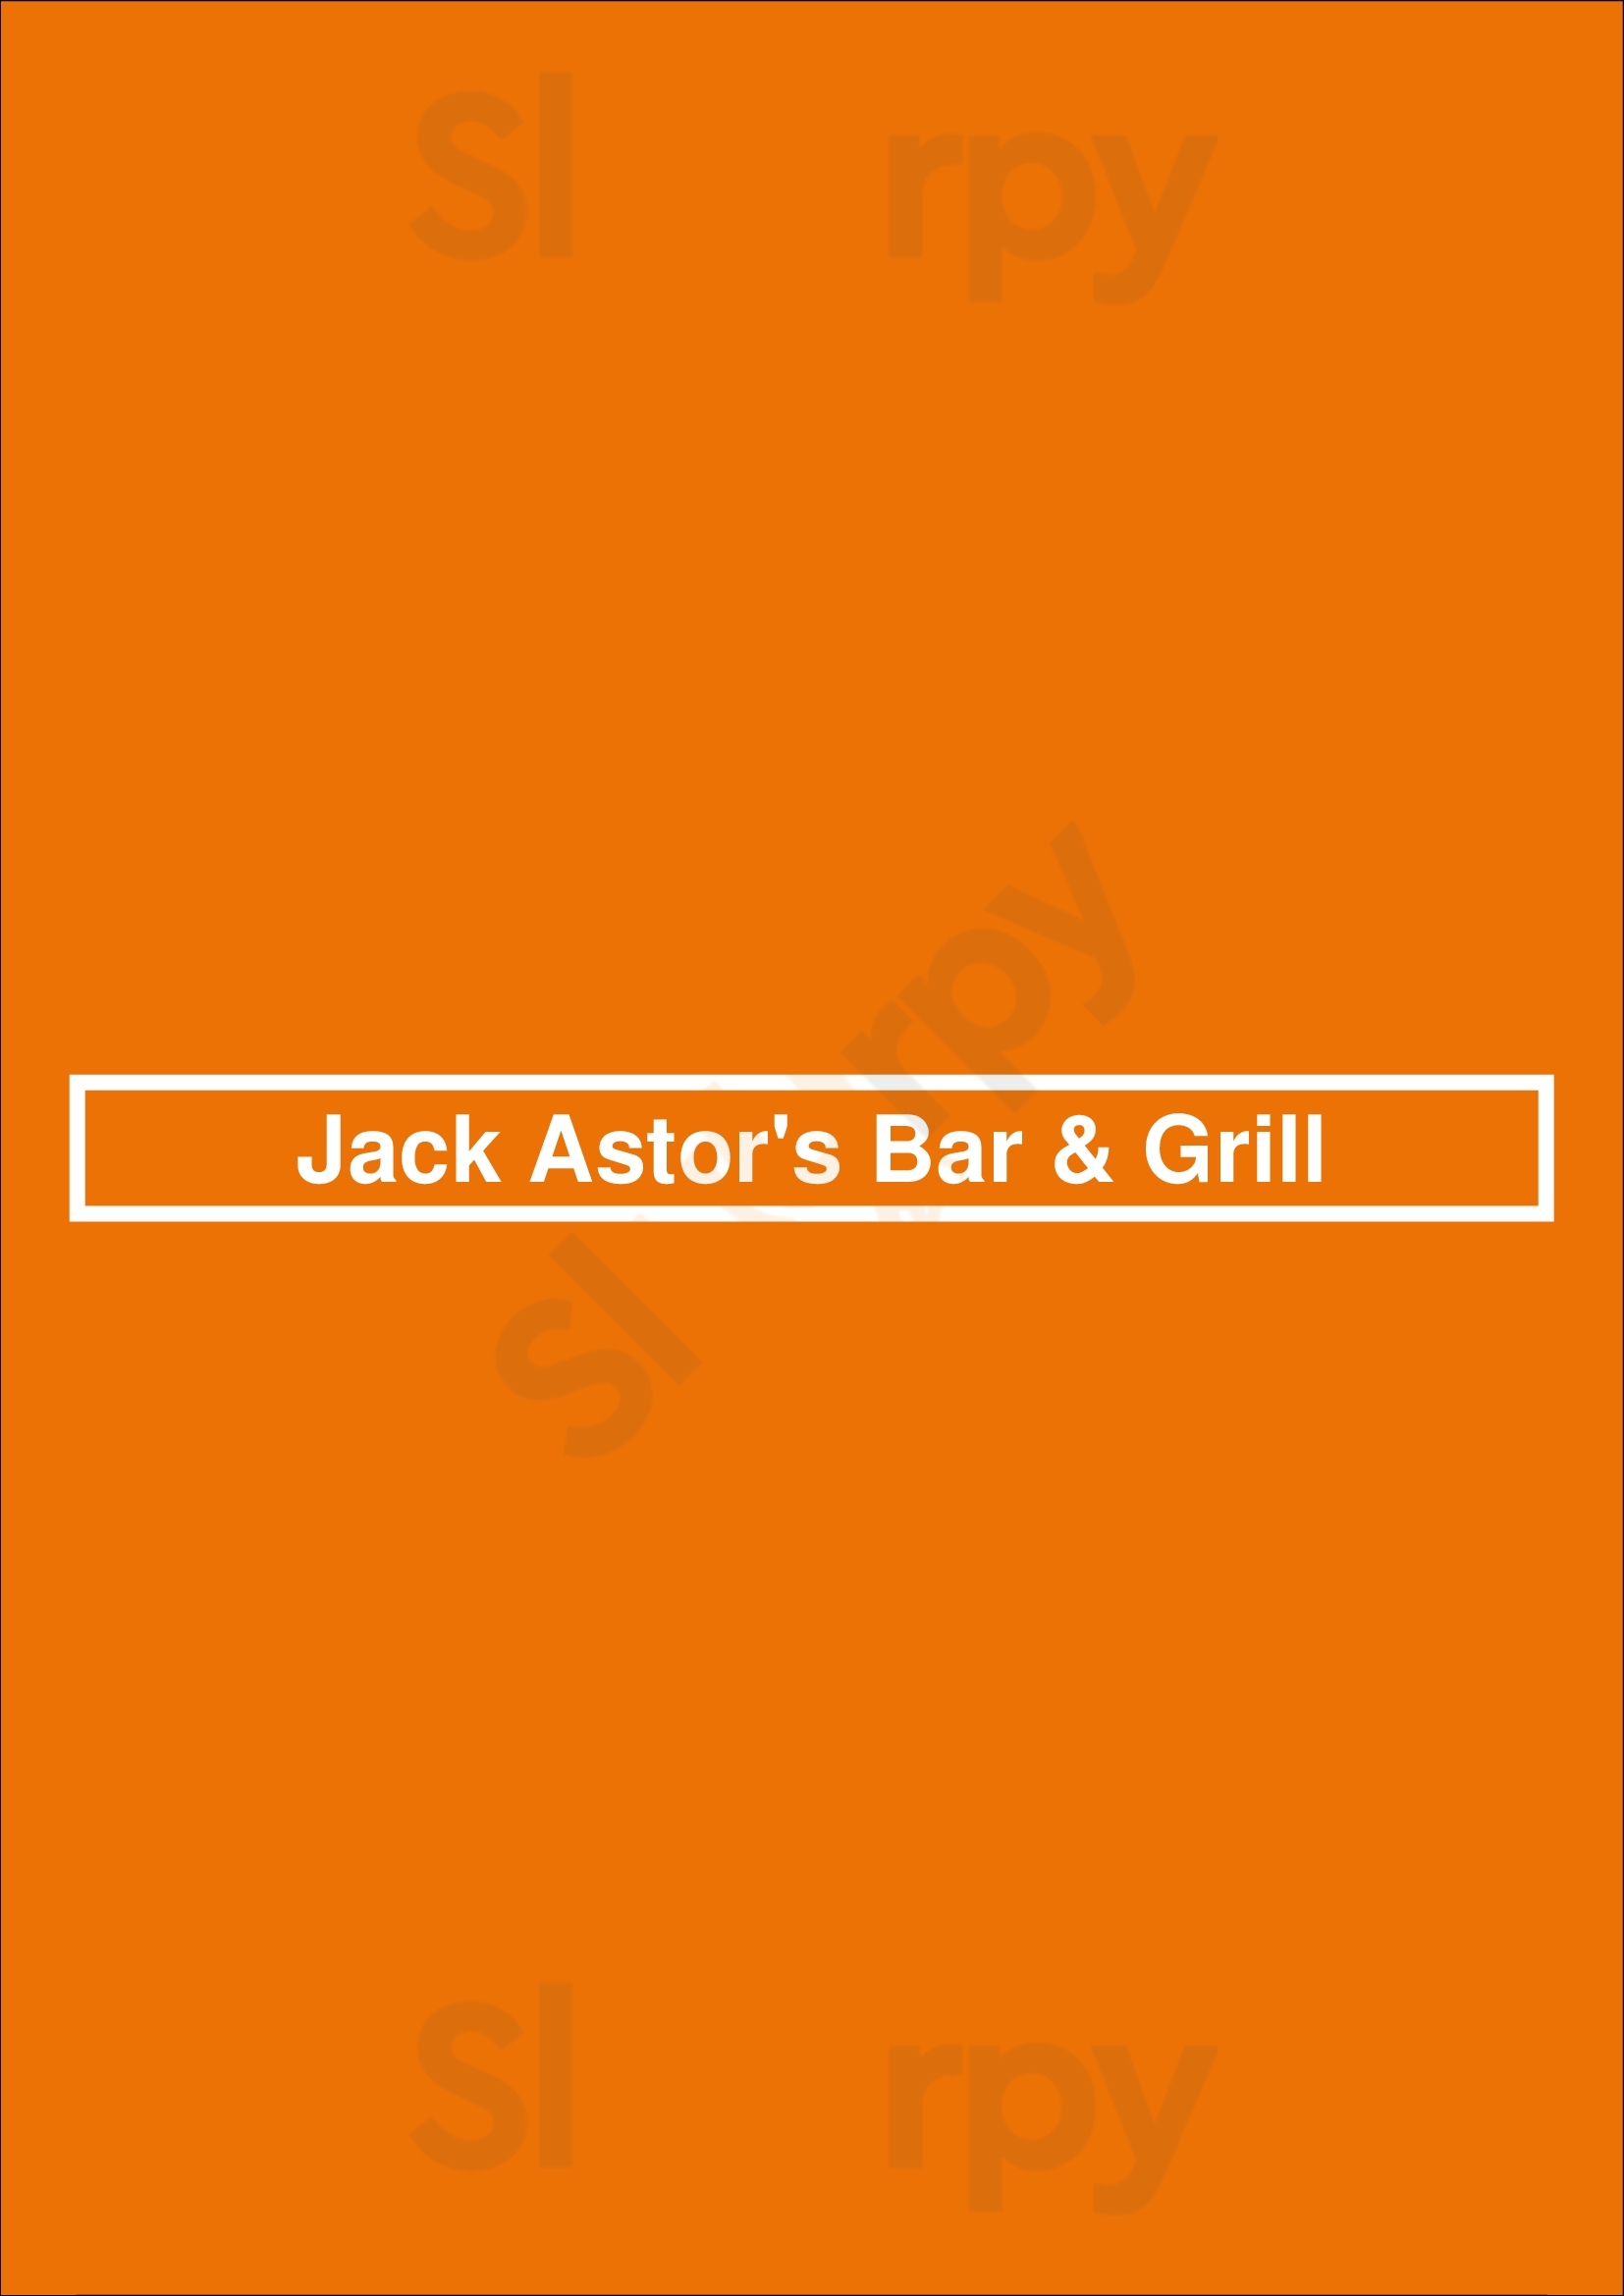 Jack Astor's Bar & Grill Calgary Menu - 1